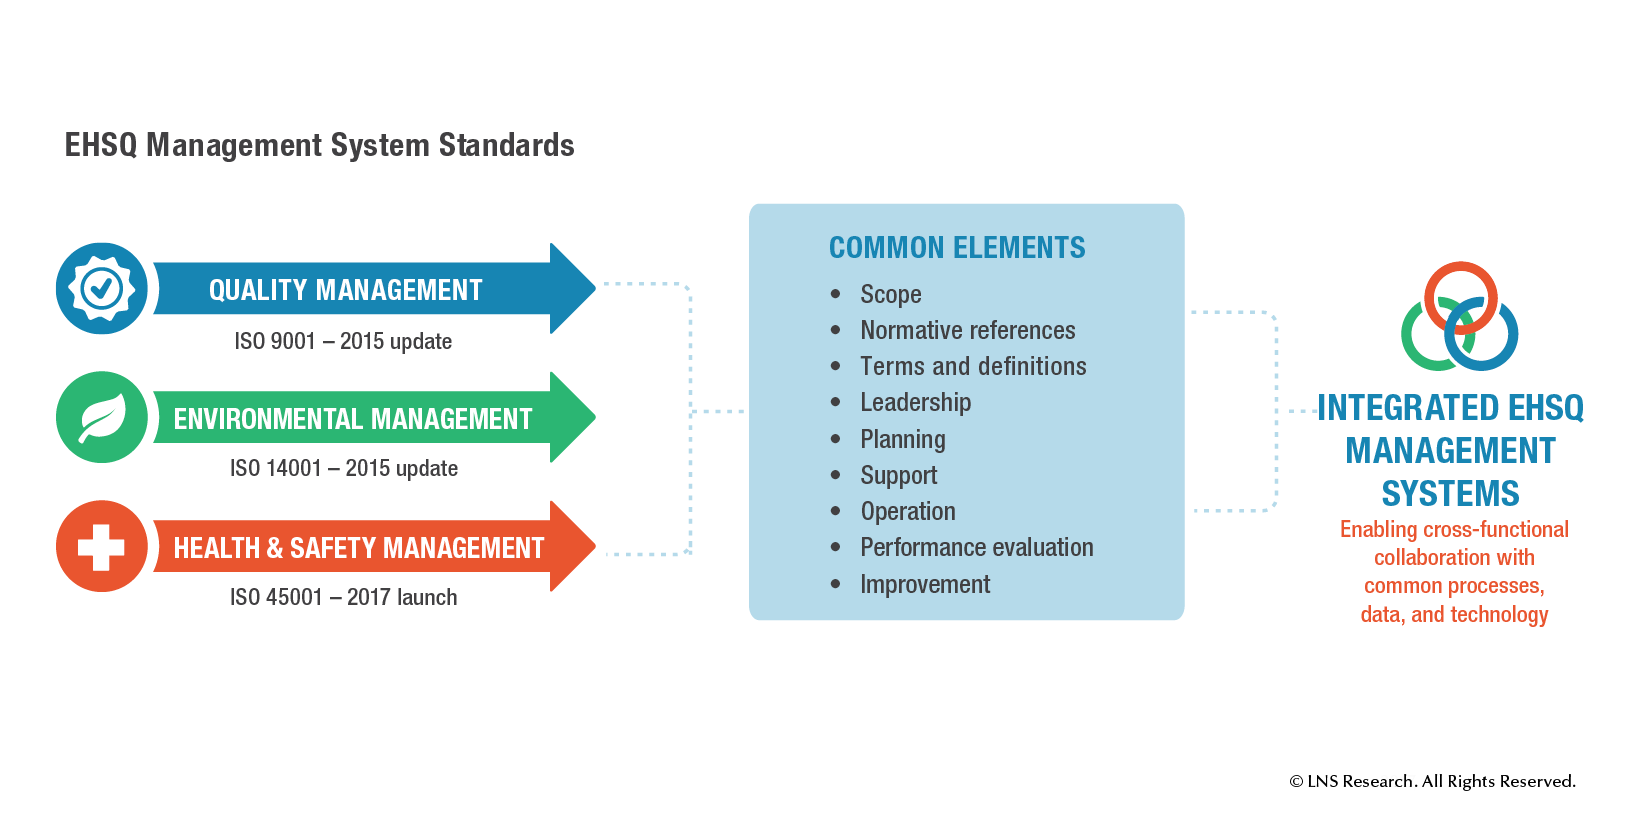 EHSQ Management Systems Common Elements